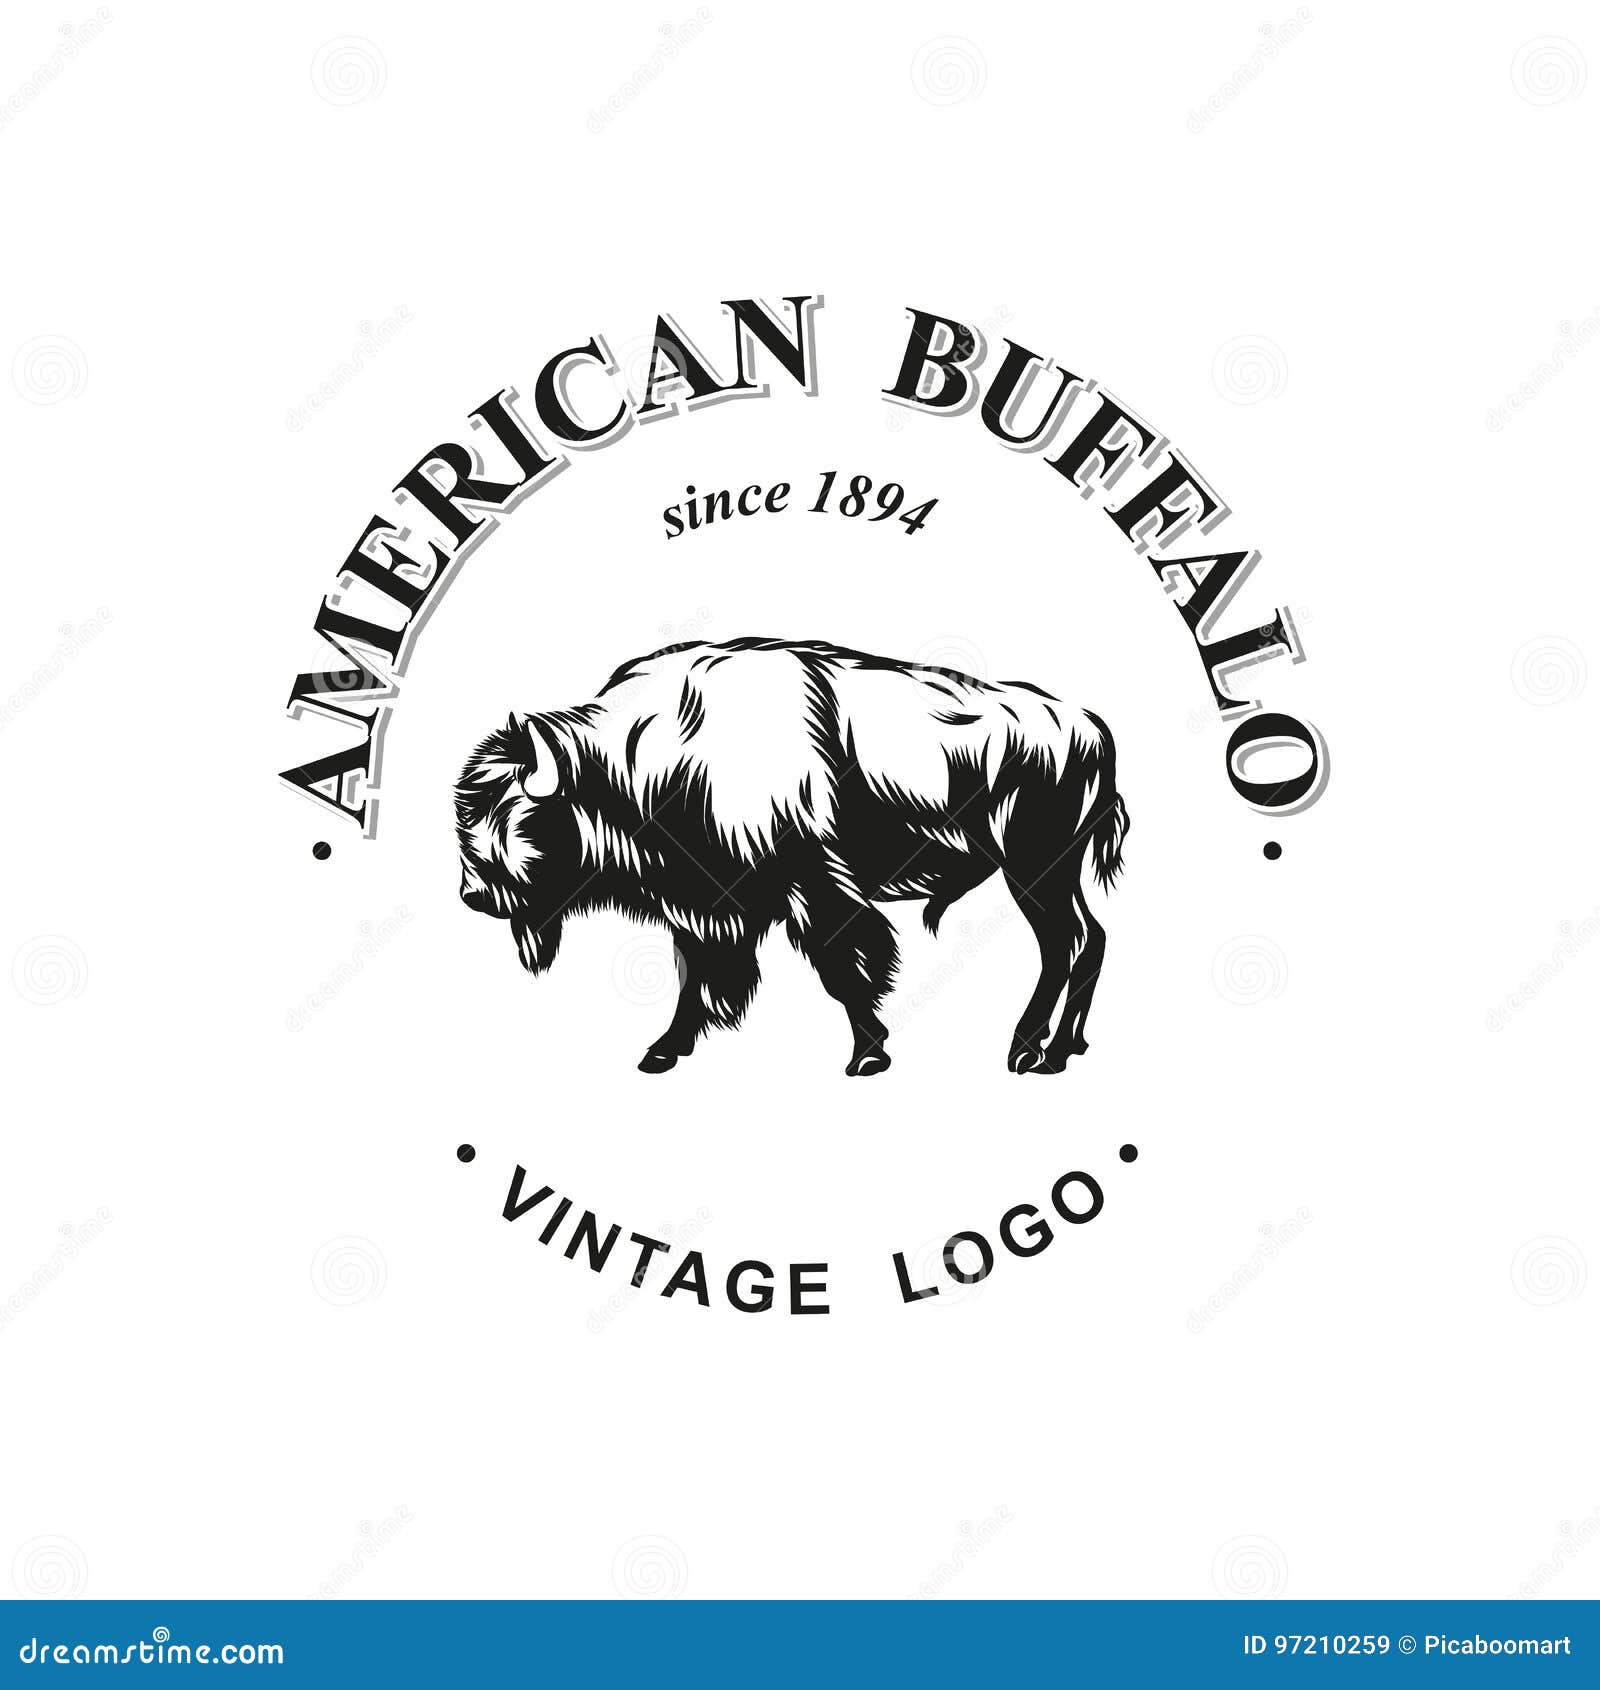 american buffalo logo inked 